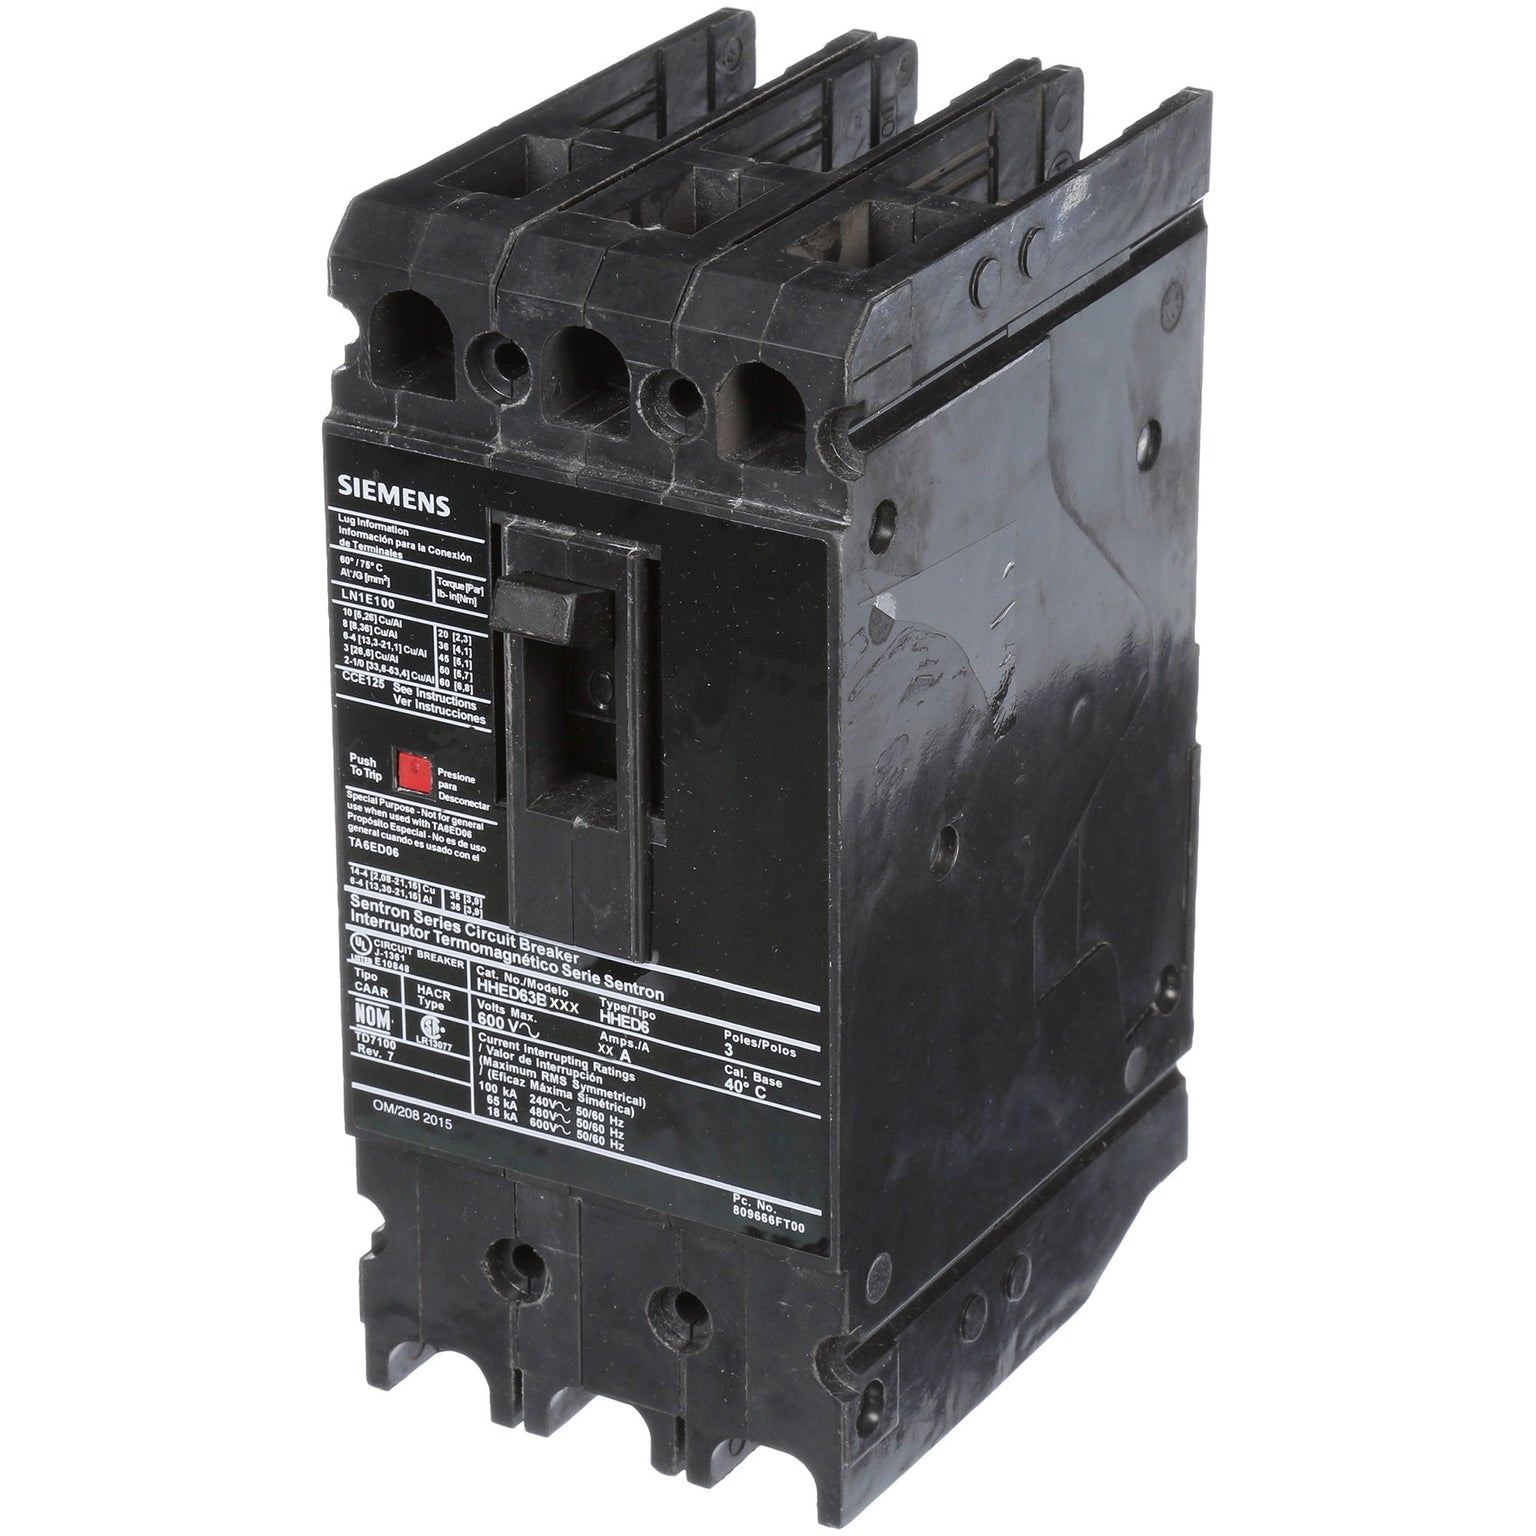 HHED63B015 - Siemens - Molded Case Circuit Breaker